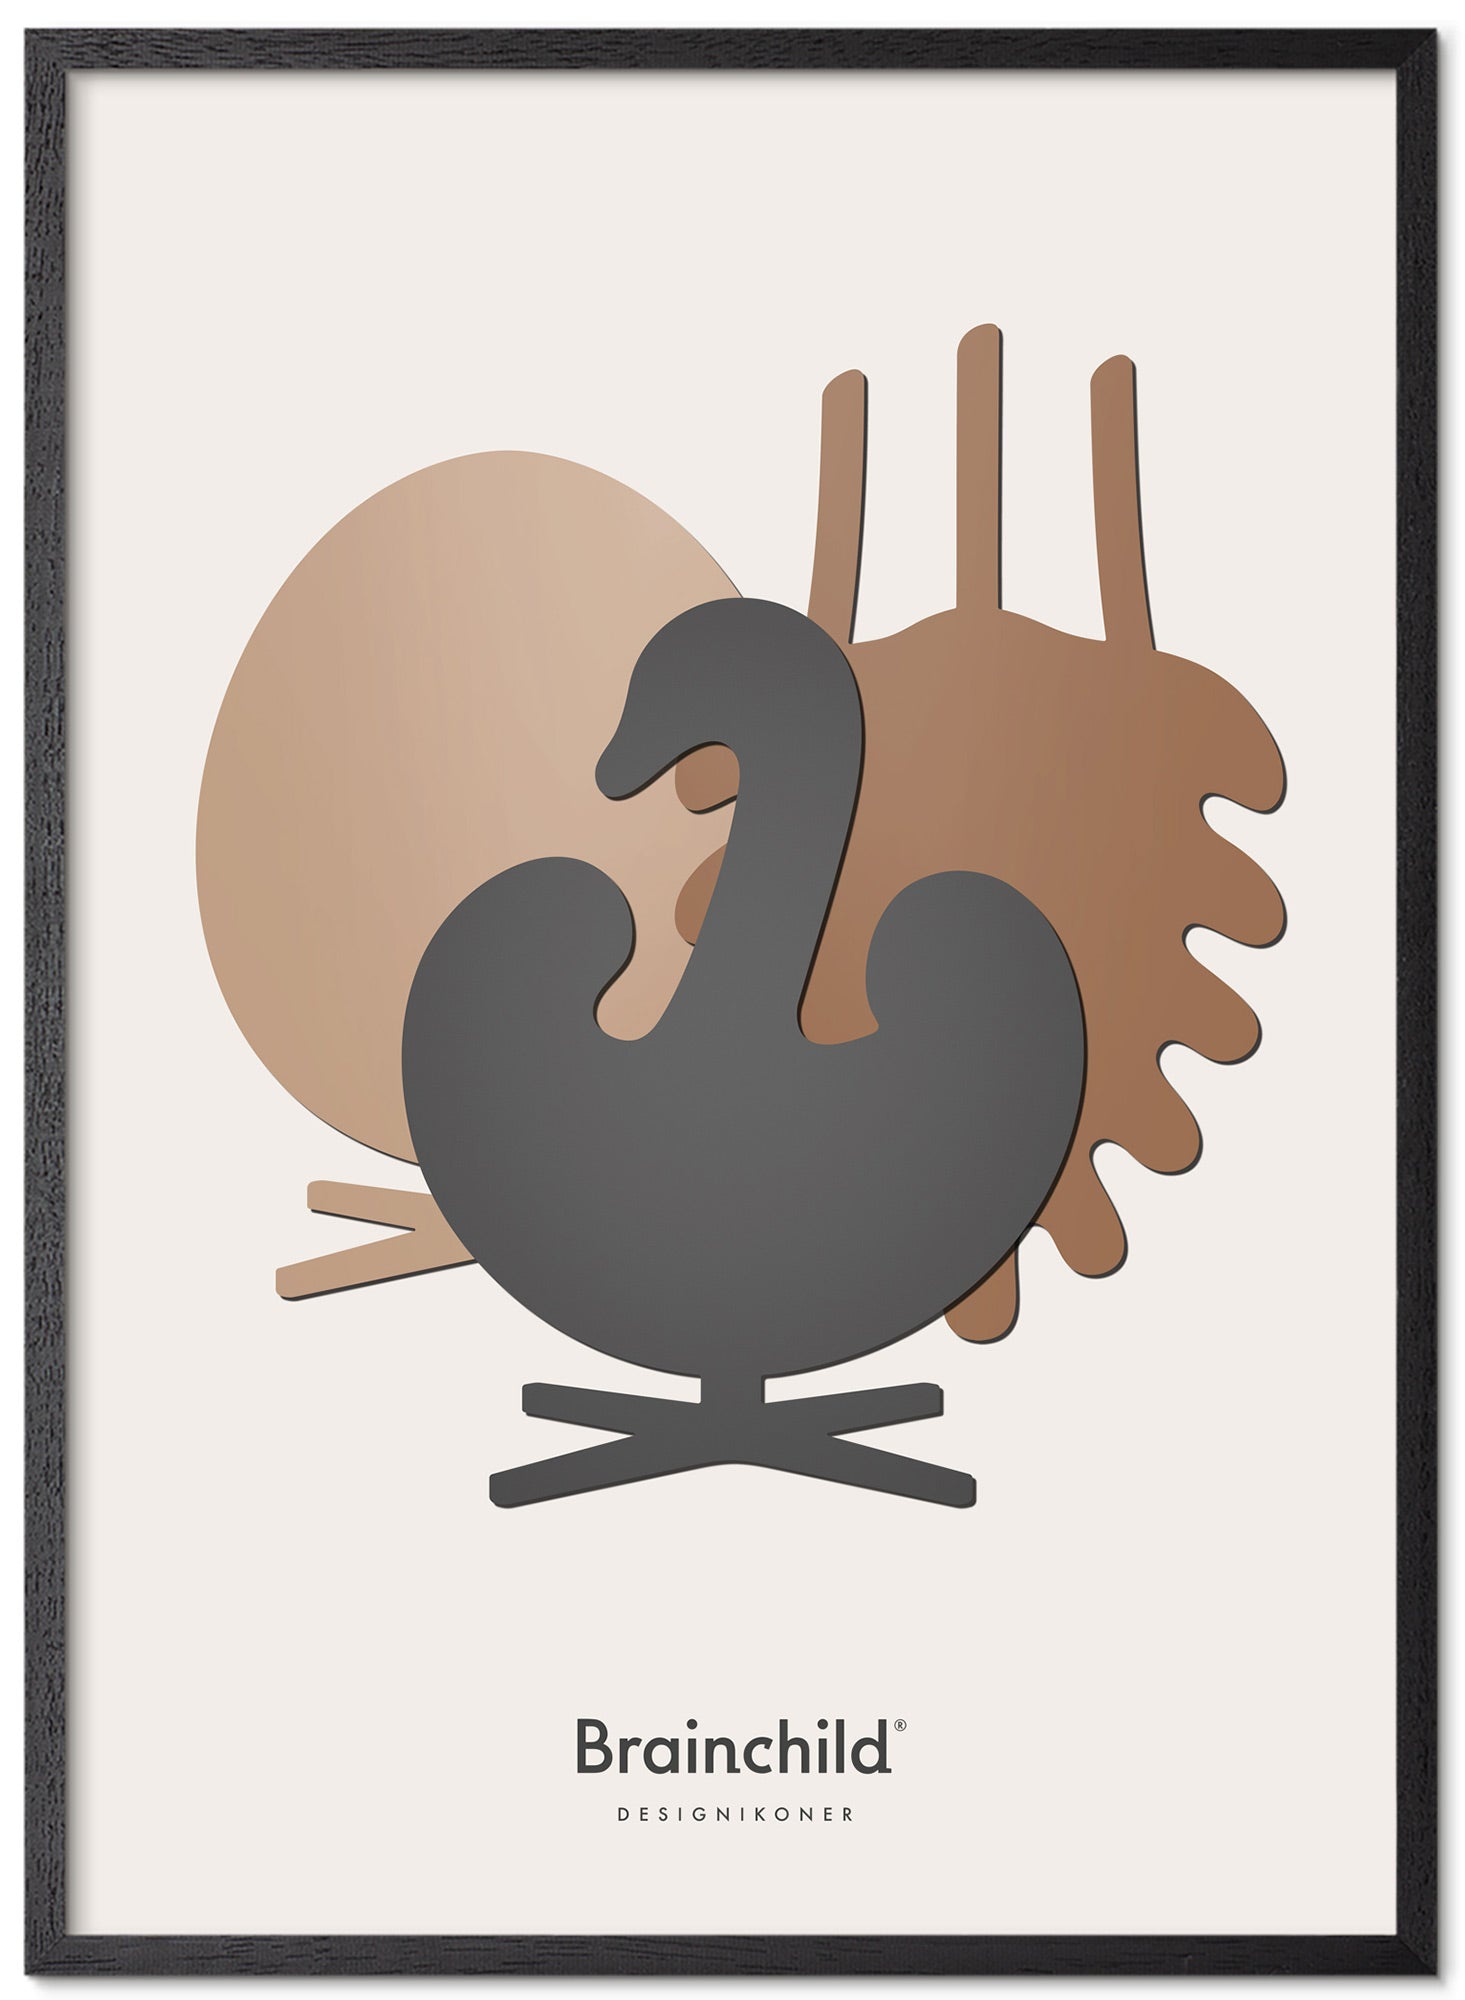 Brainchild Designikoner Poster Symphony Frame in Black Lacquered Wood A5, Light Gray